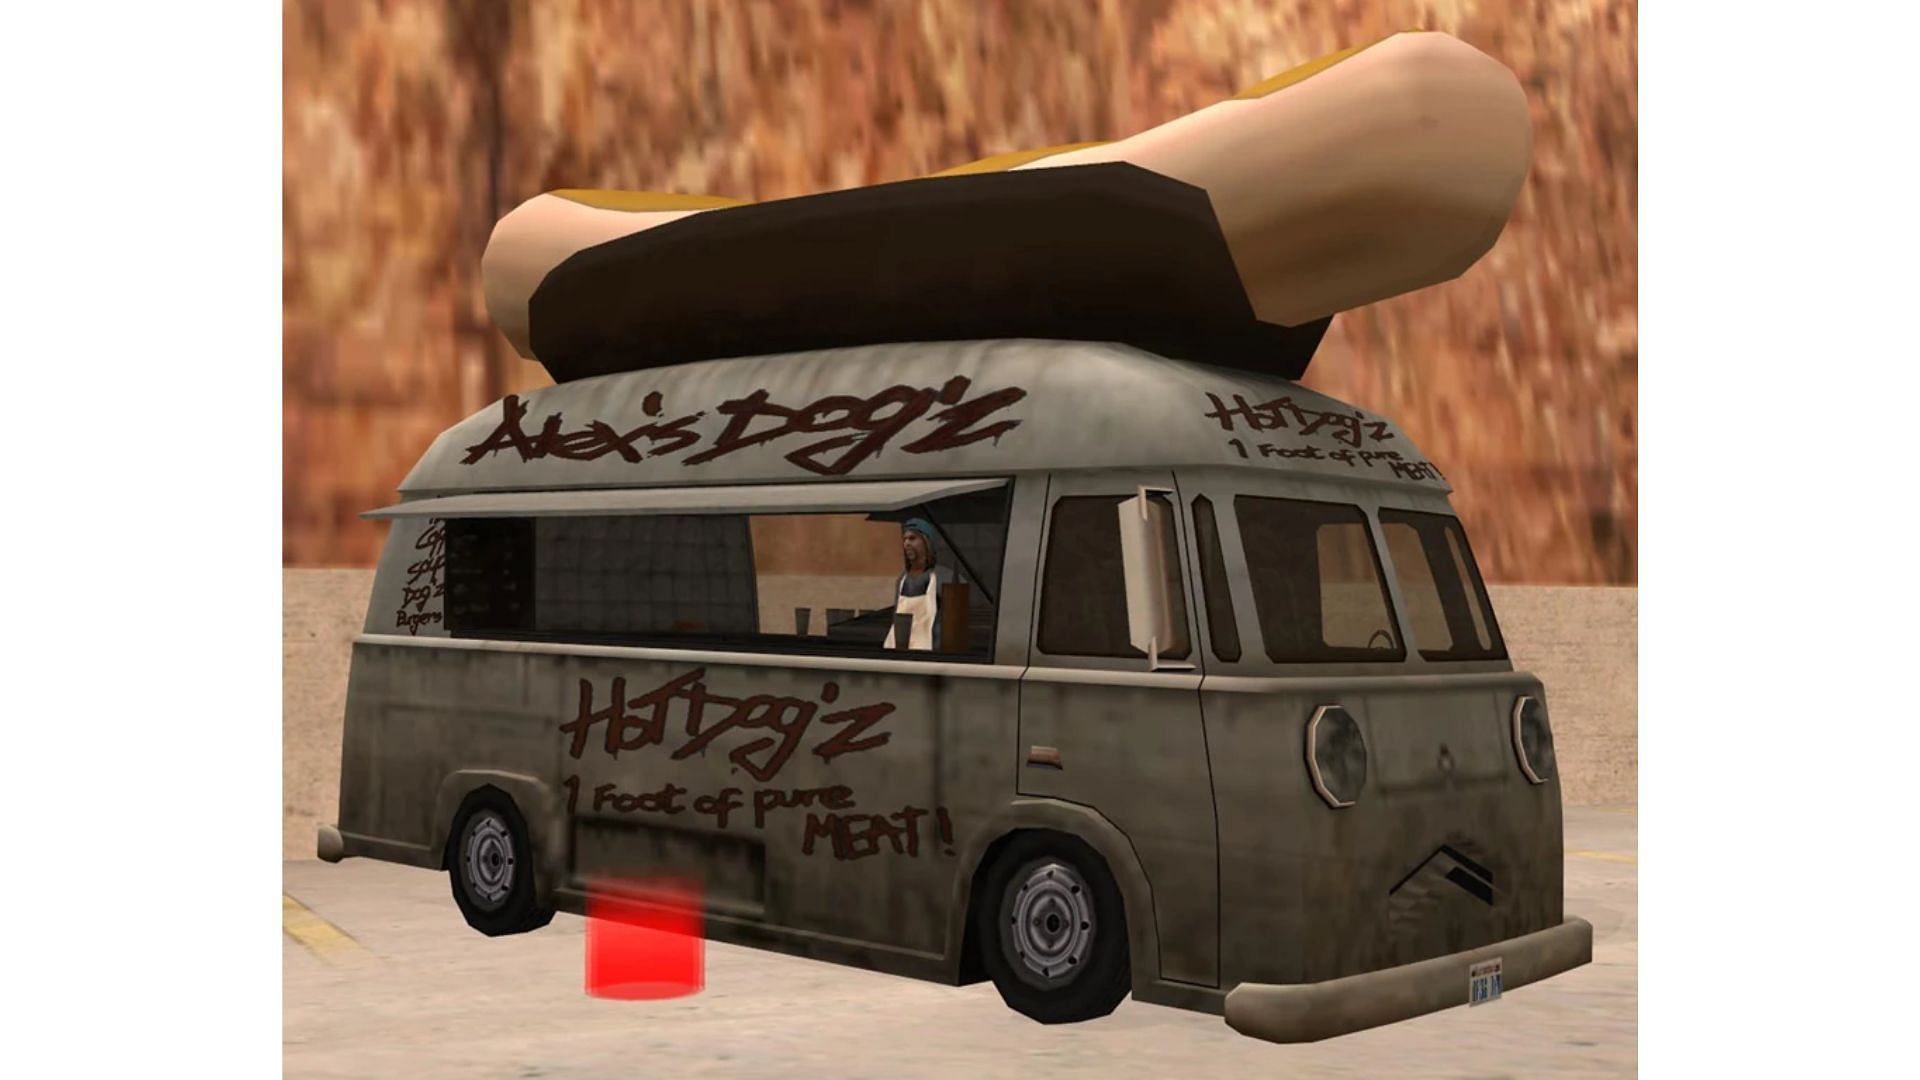 A hotdog van in Grand Theft Auto: San Andreas (Image via GTA Wiki)